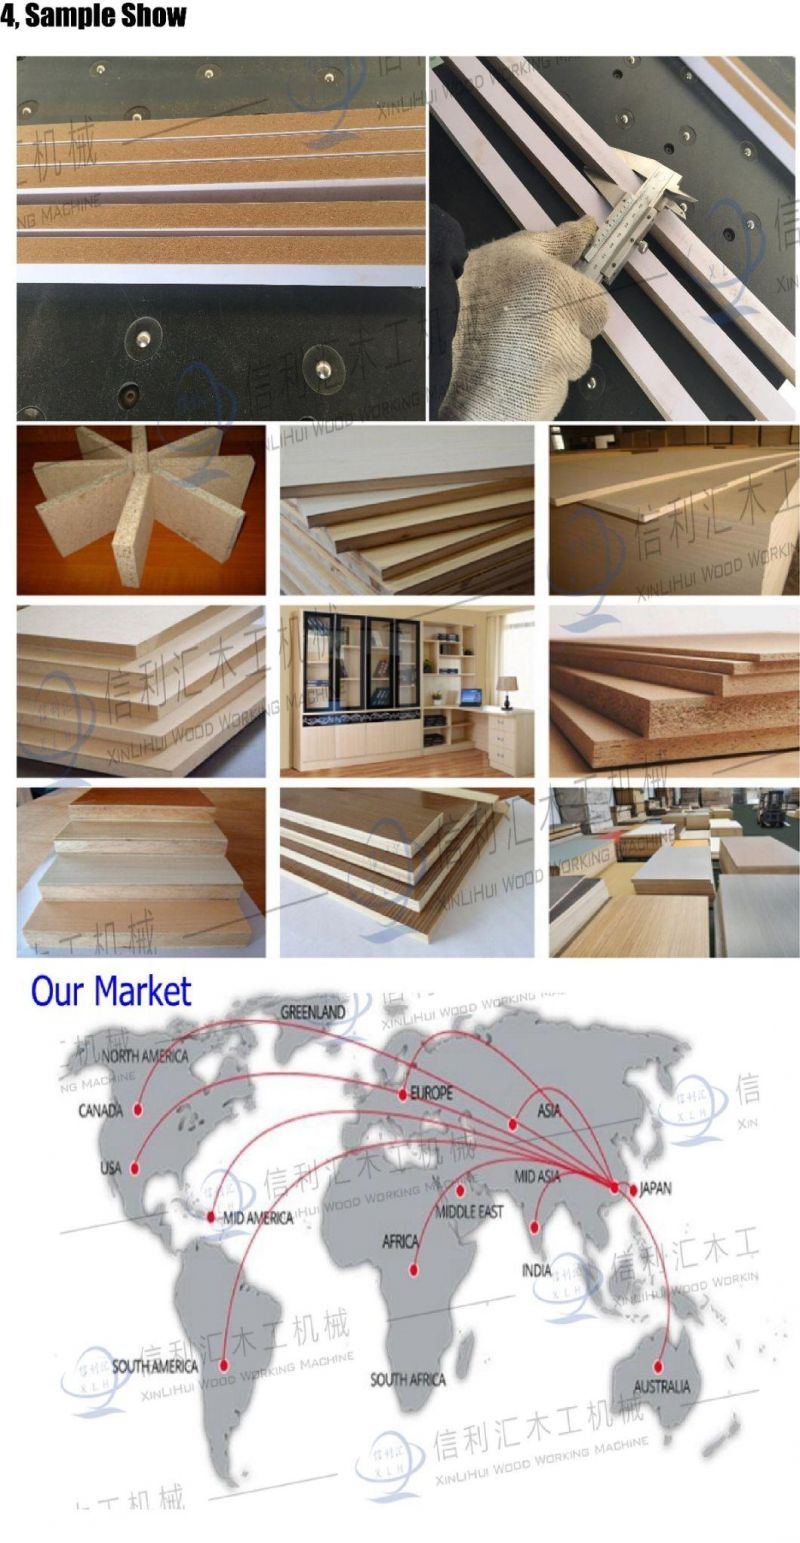 Wood Precision Sliding Table Reciprocating Panel Saw Machine/ Má Quina De La Carpinterí a Electronic Panel Saw China Computer Cutting Saw Cheap